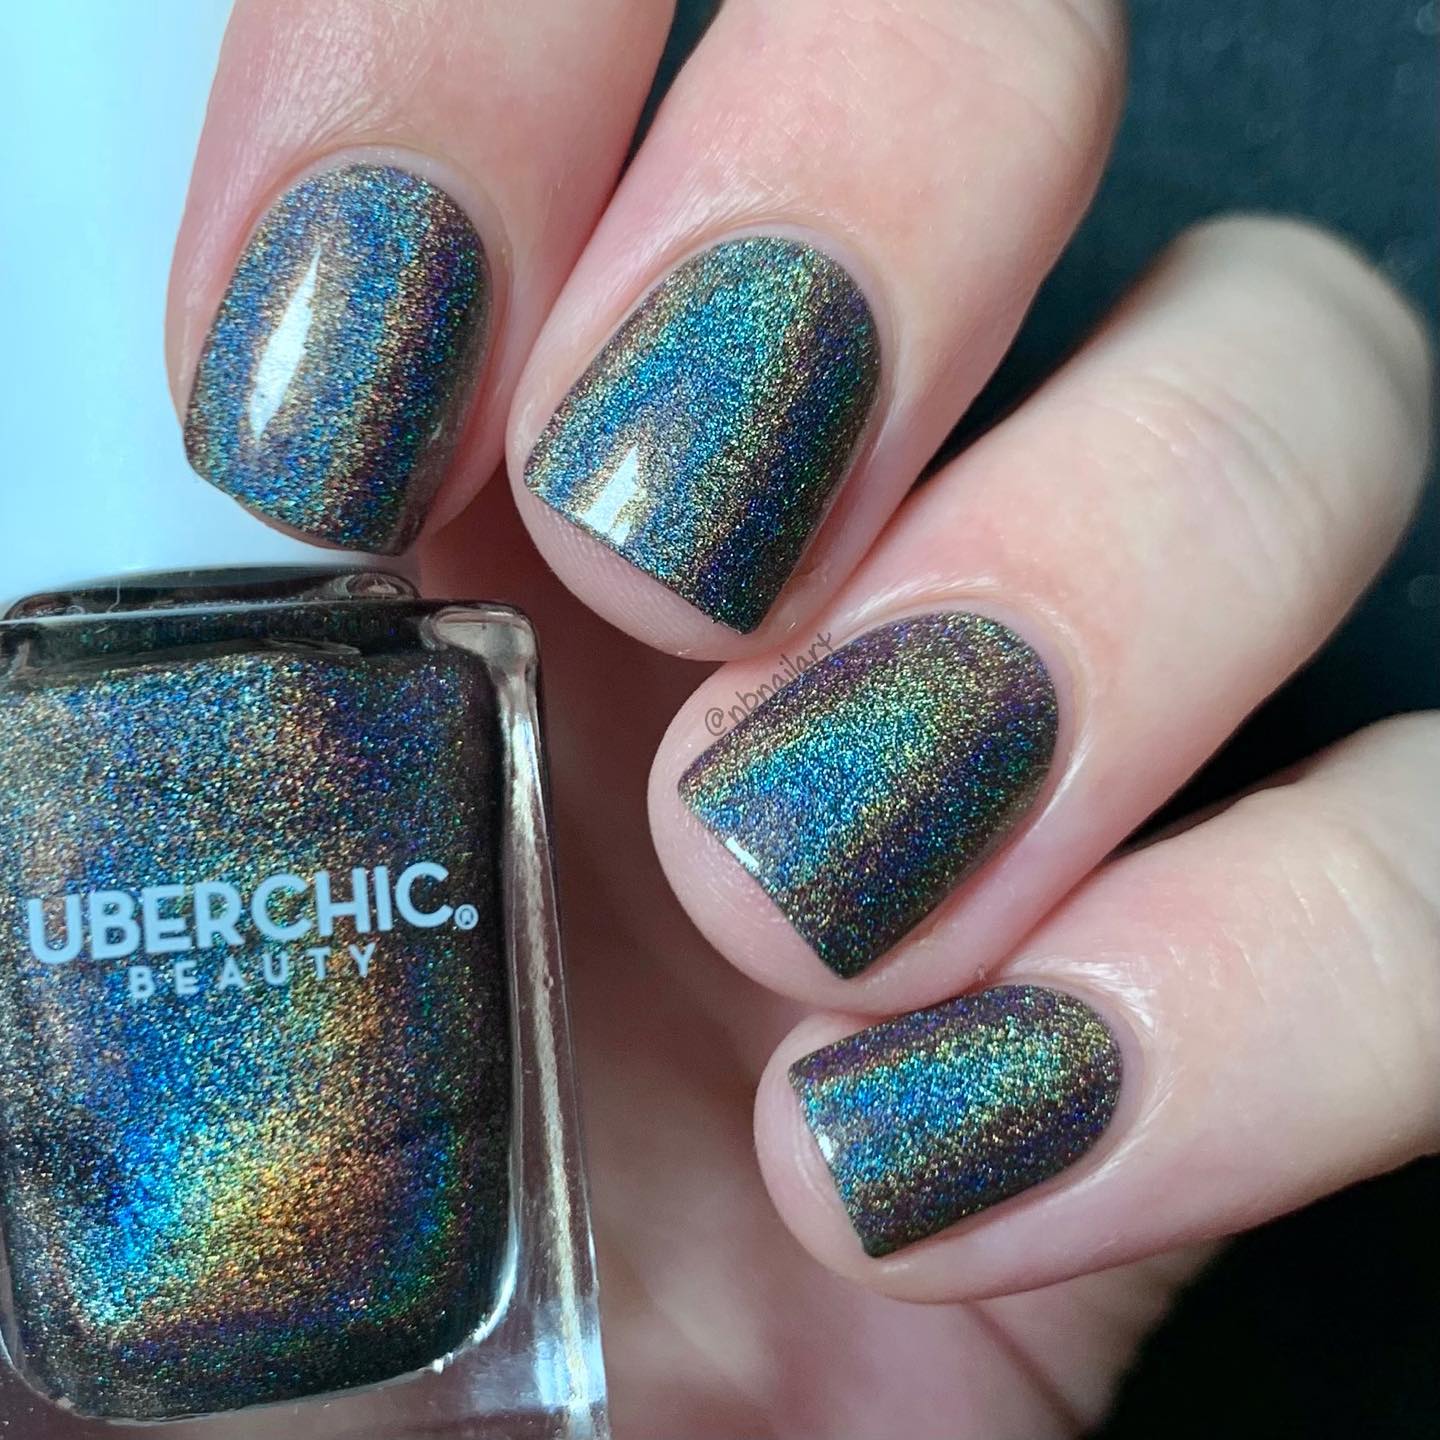 UberChic Beauty - Come On Pretty Mama Nail Polish (Glow in the Dark)